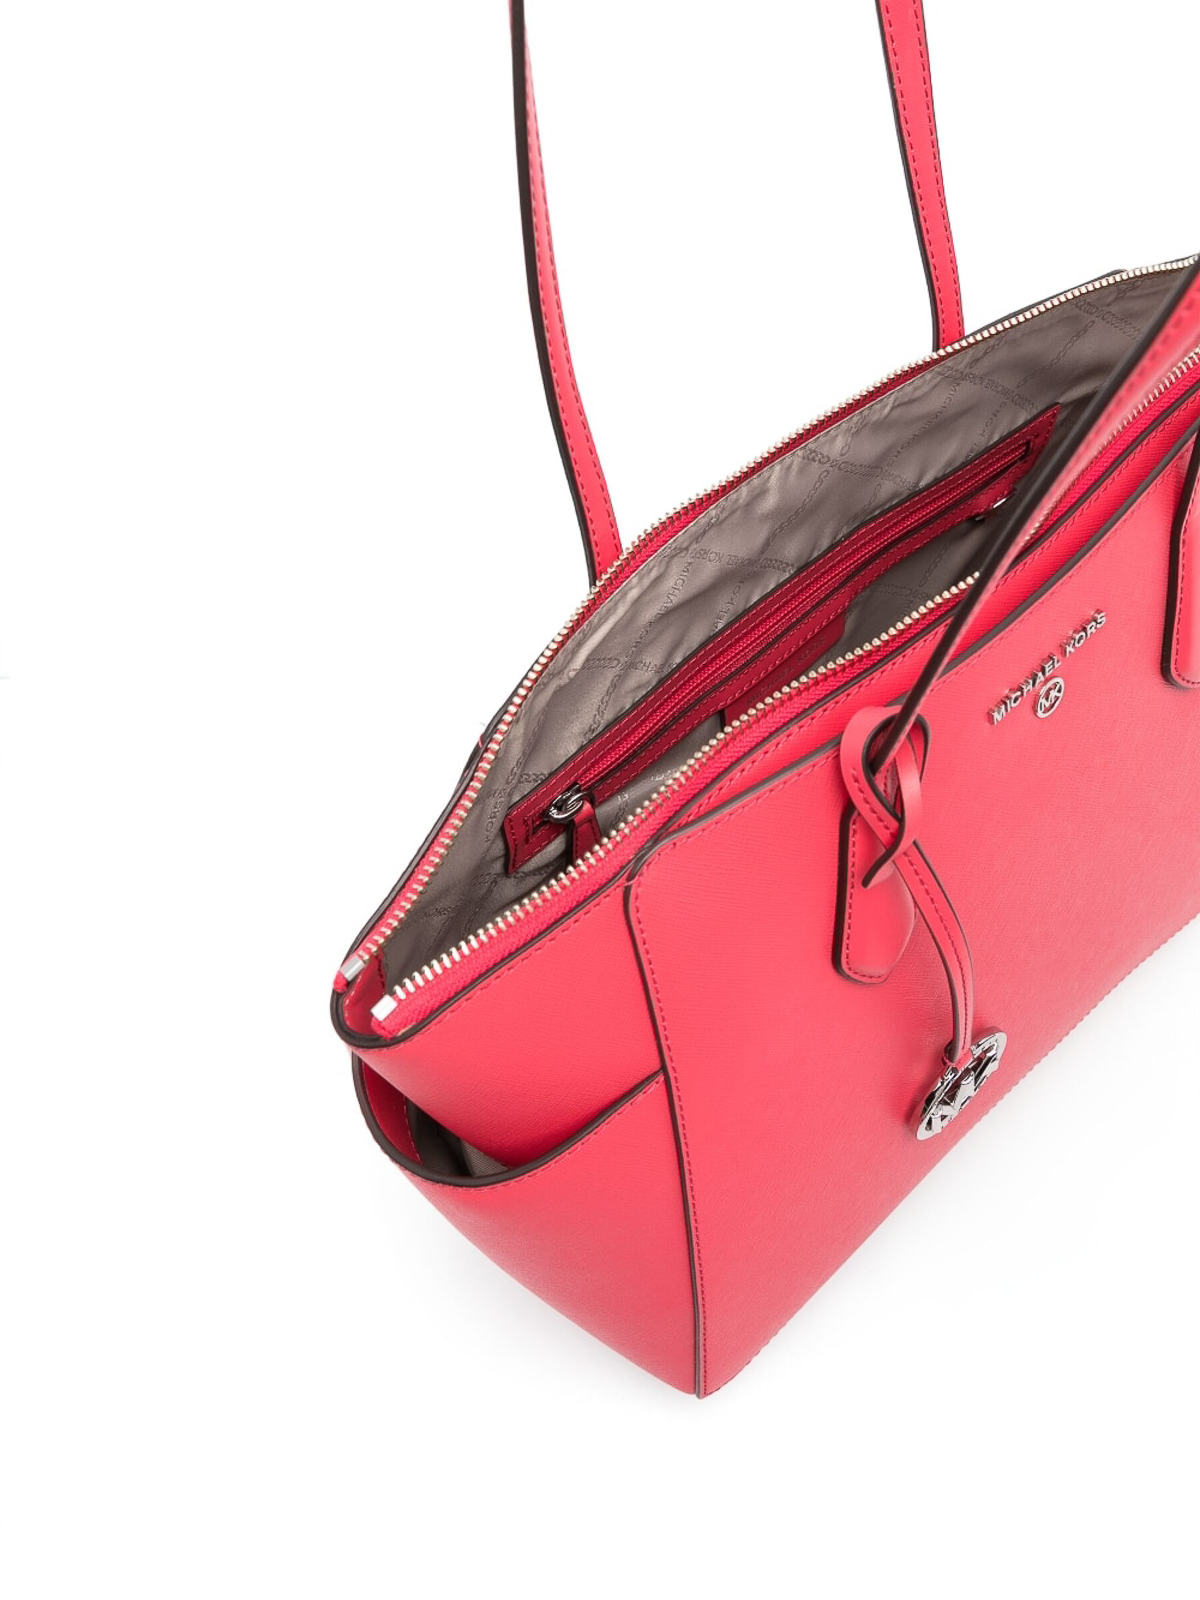 Michael Kors Medium Marilyn Leather Tote Bag In Pink